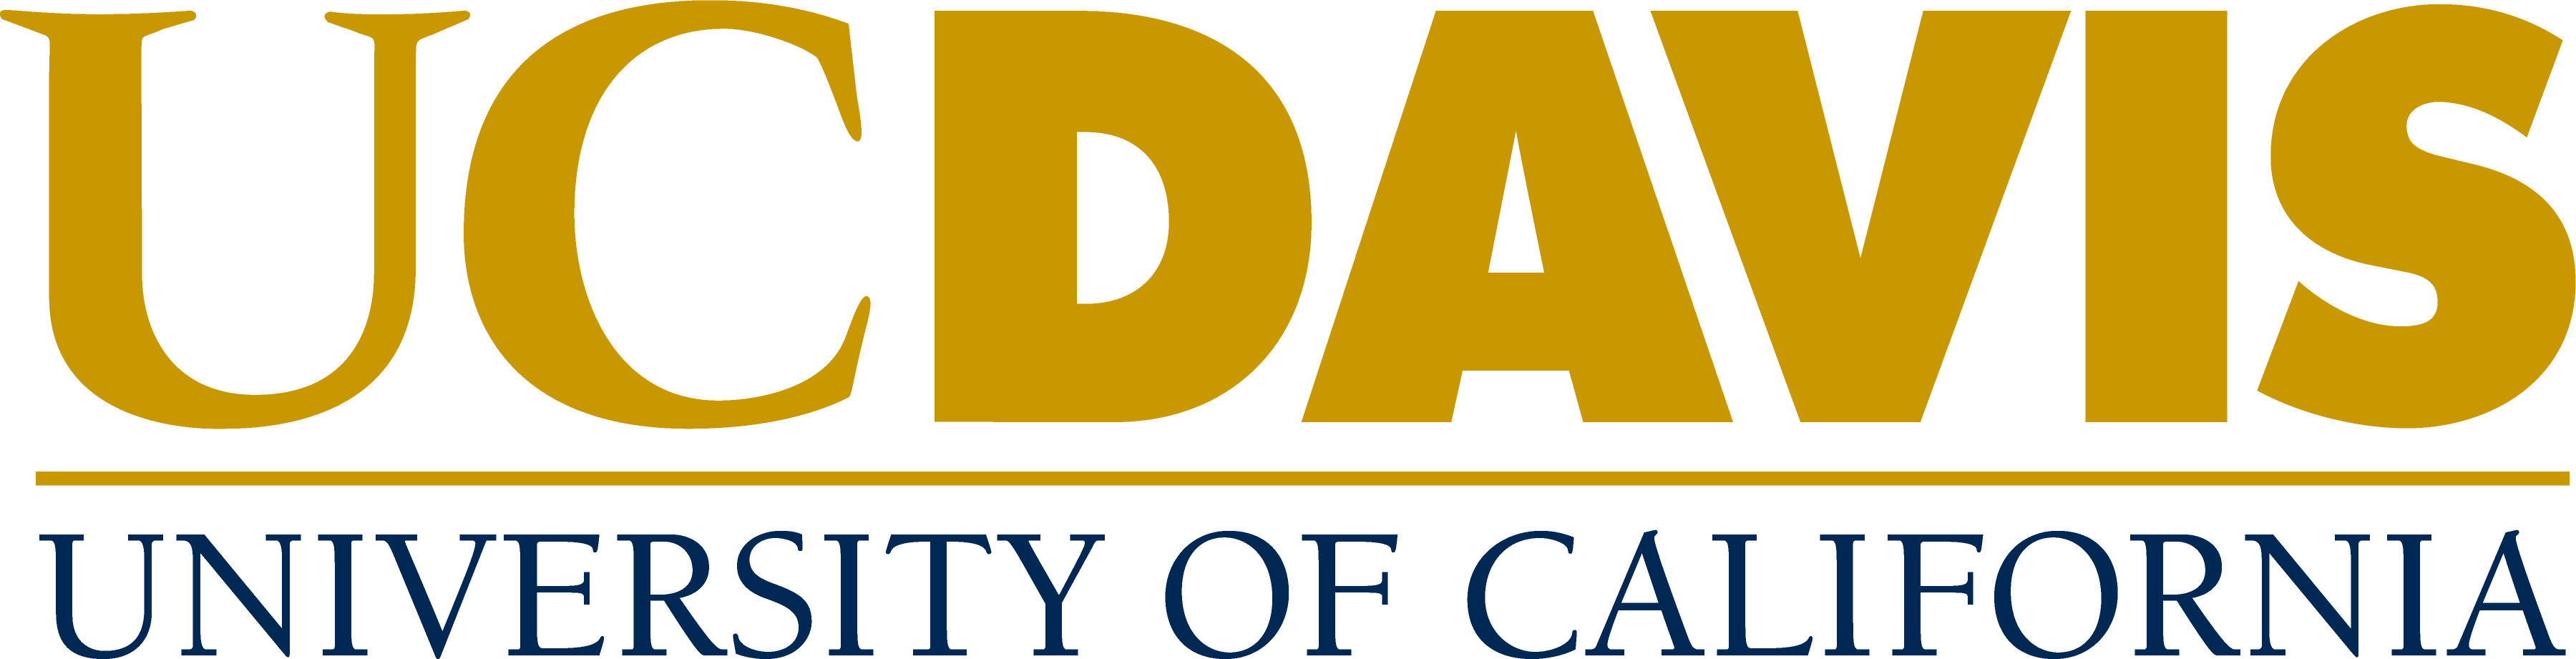 University of California, Davis (UC Davis)